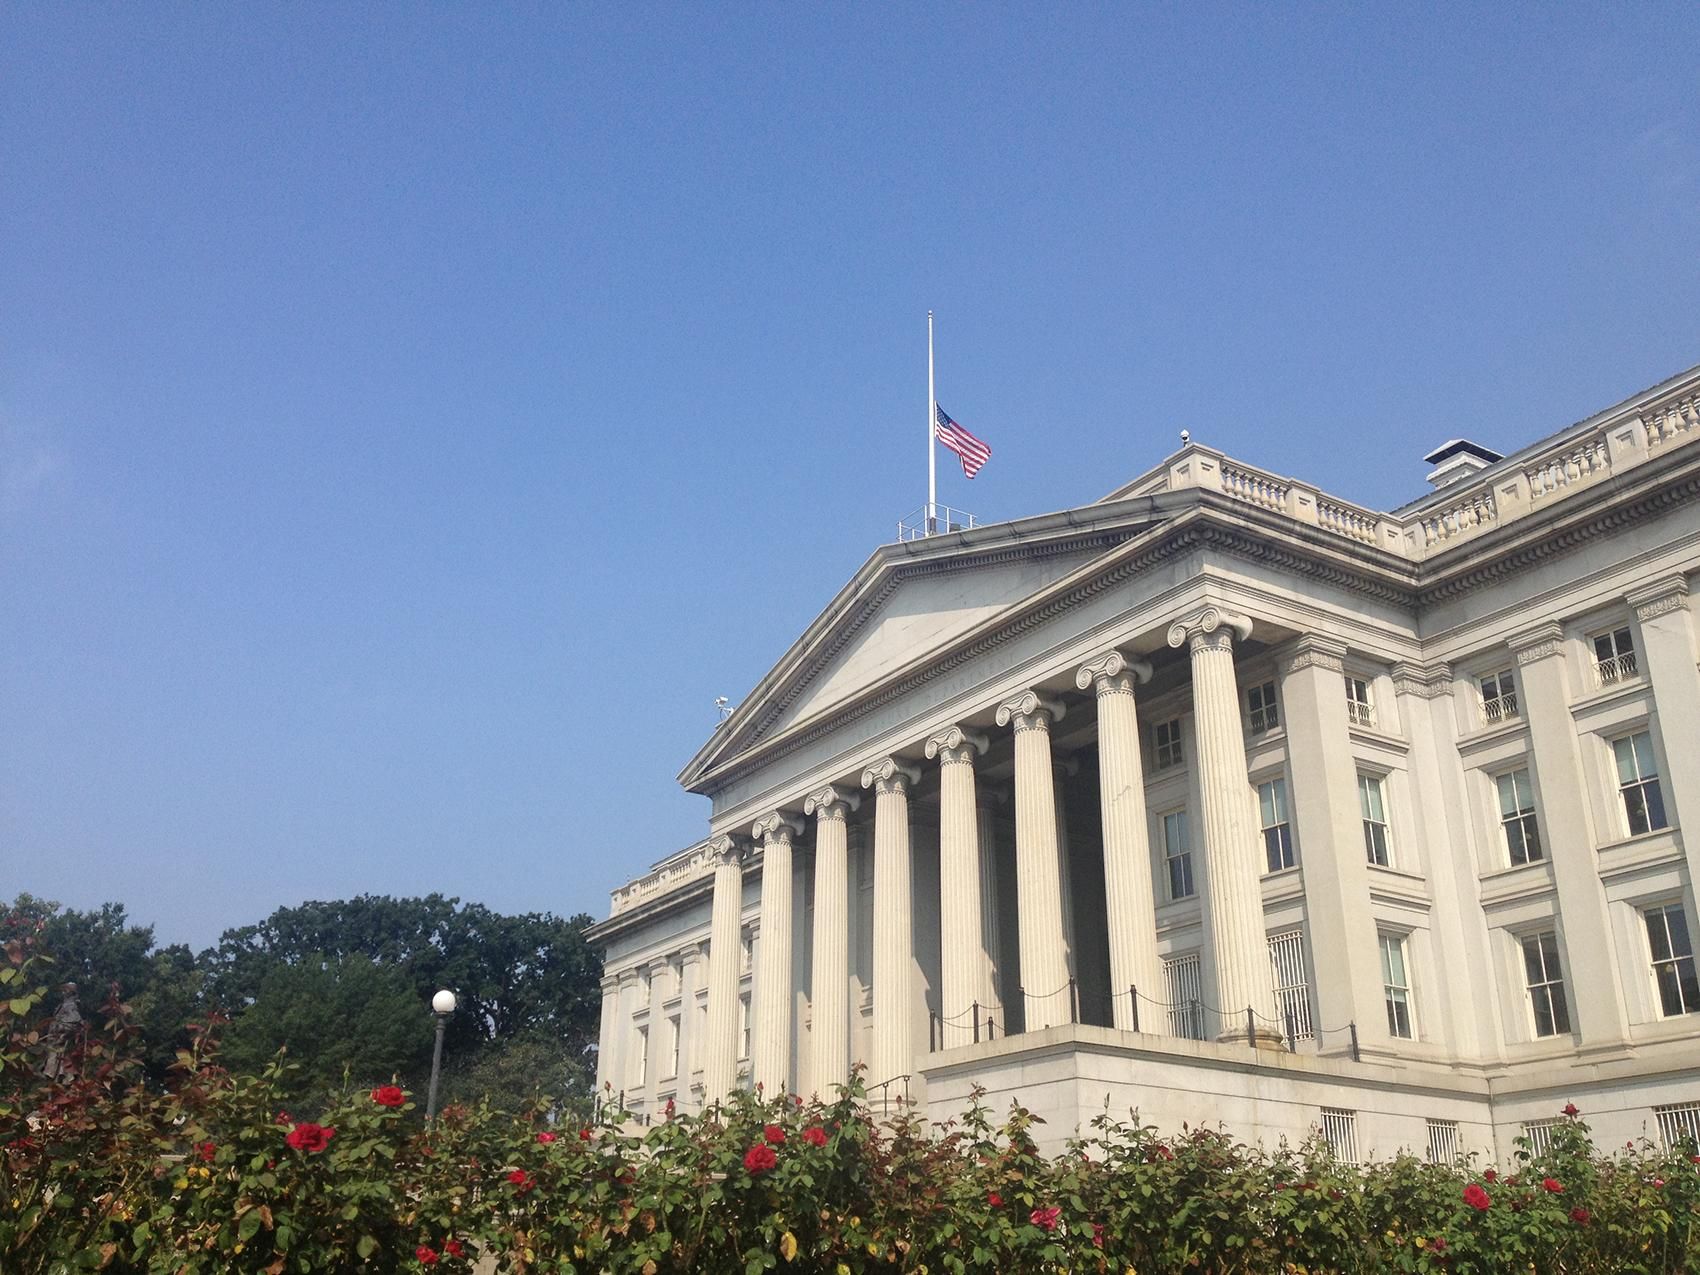 Flag at the U.S. Dept of Treasury flying at half-mast today